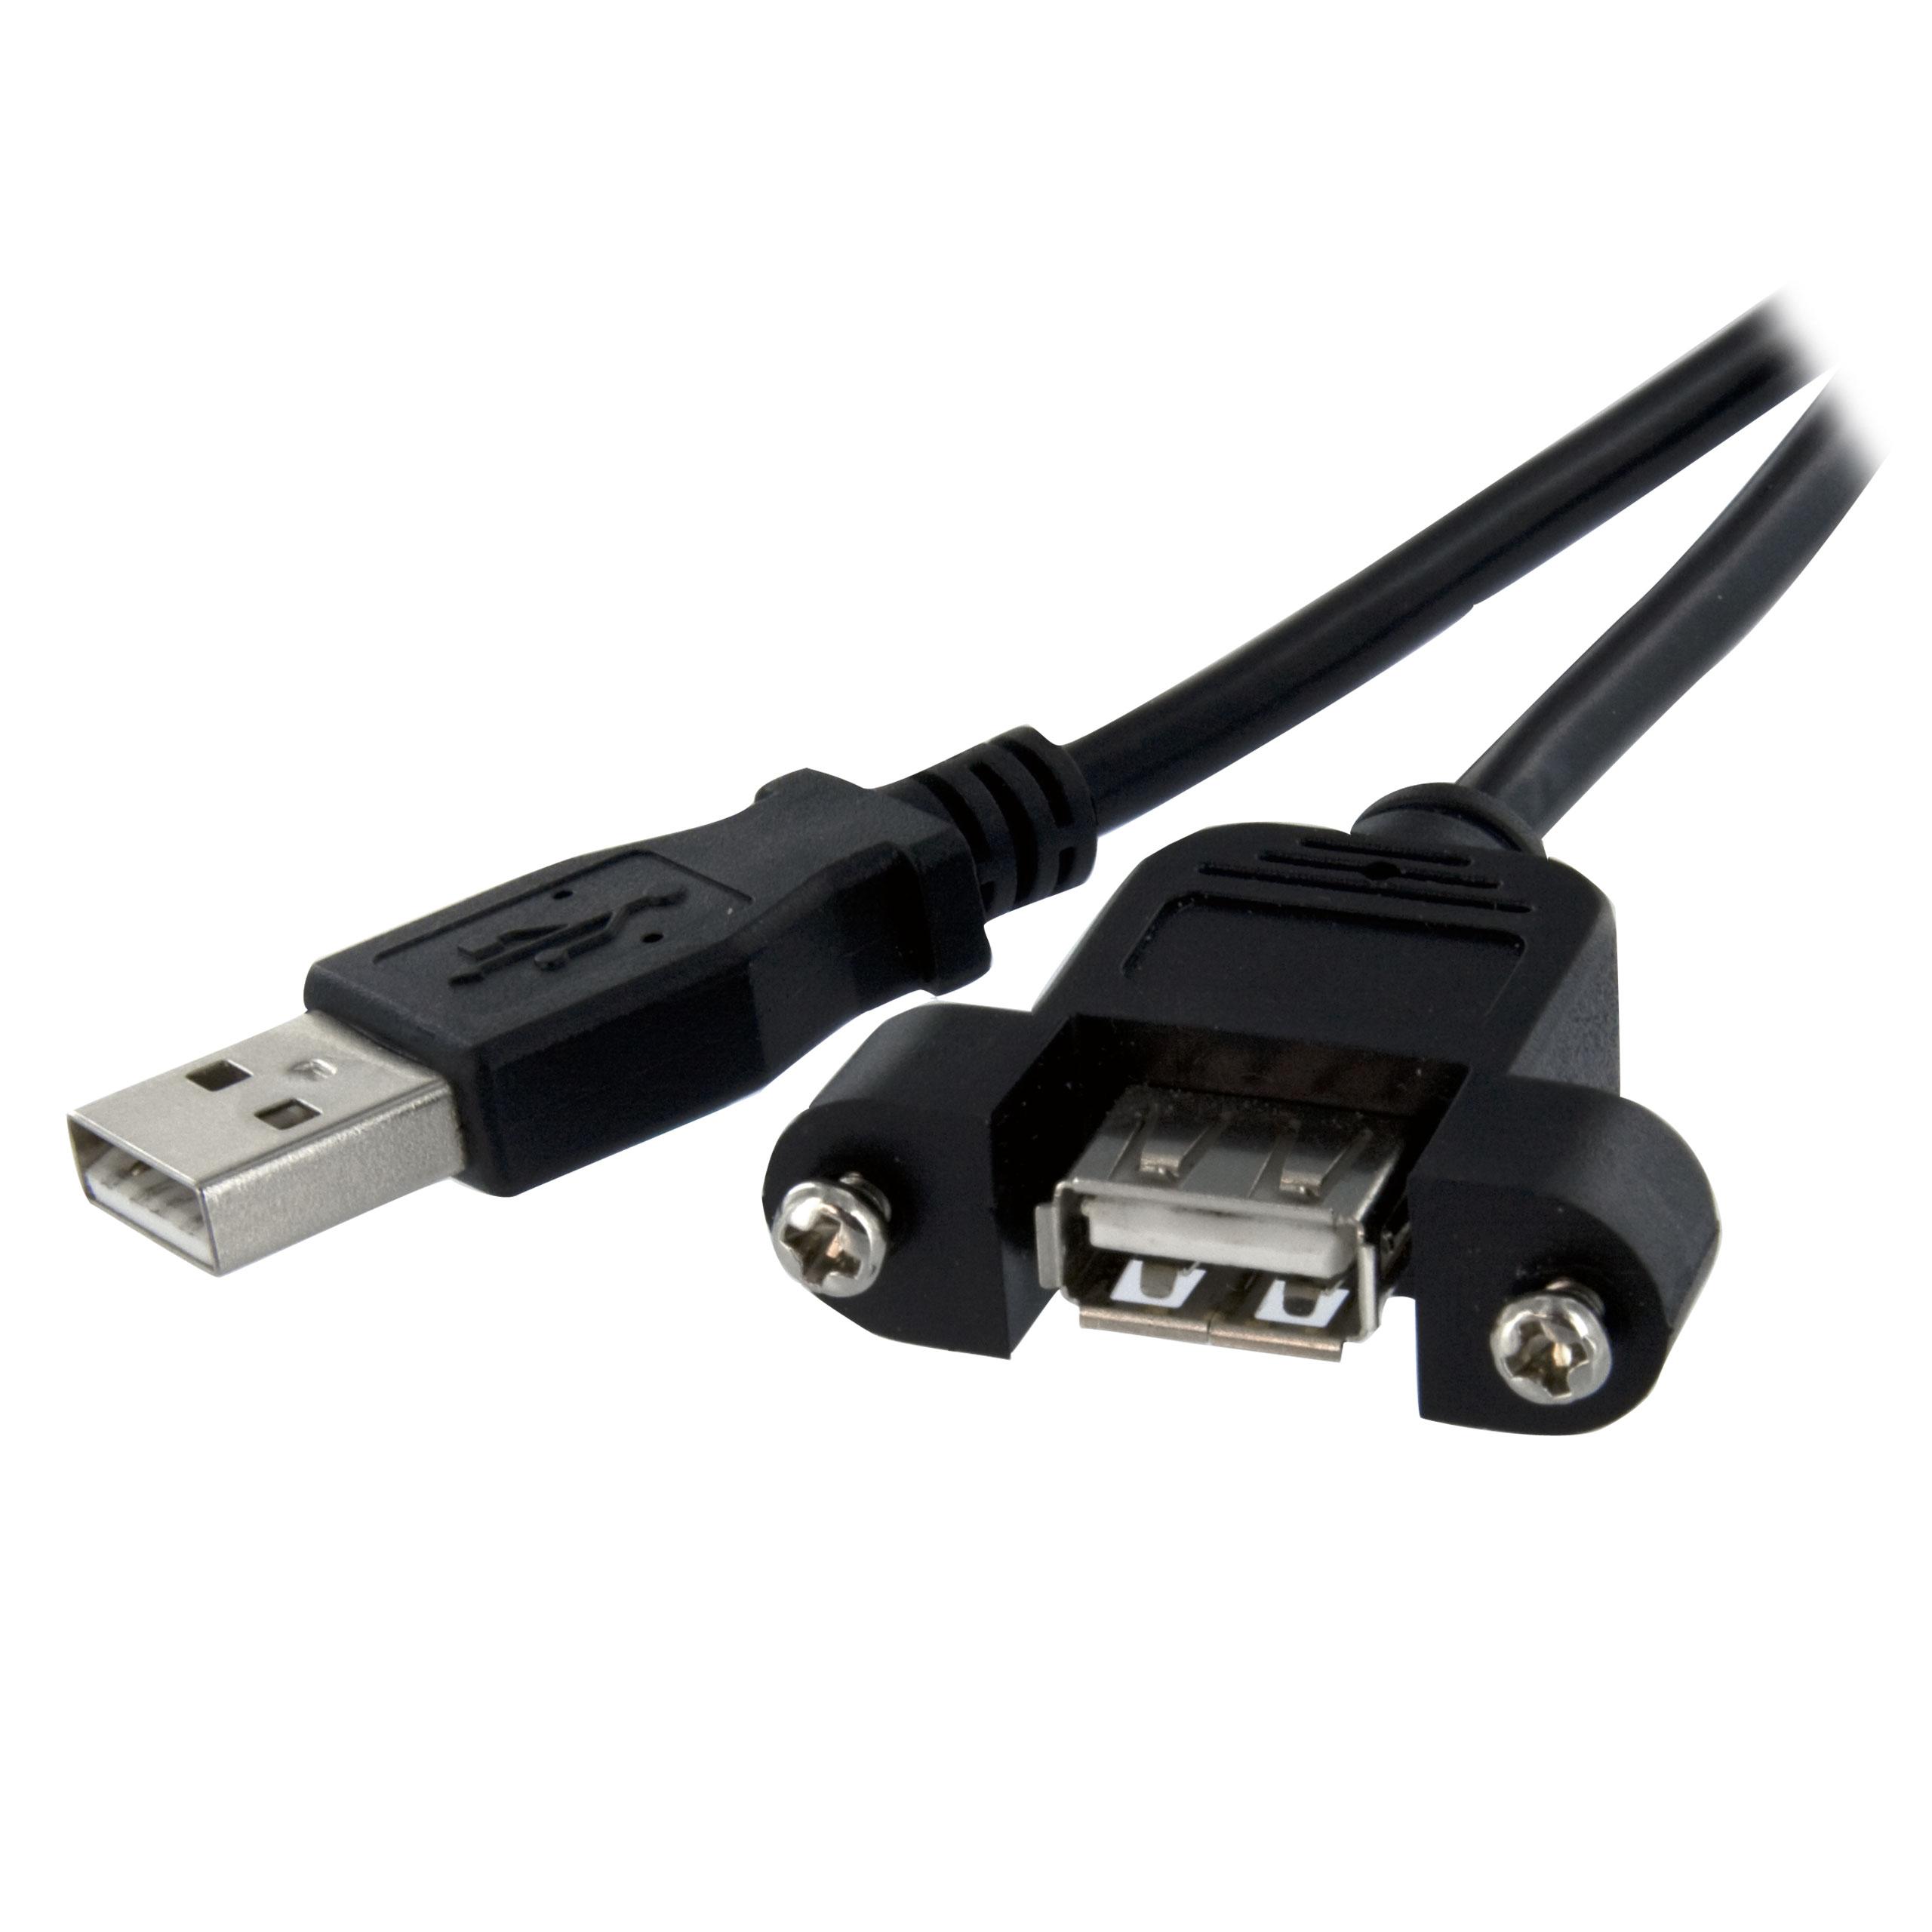 Amazon.com: StarTech.com Panel Mount USB Cable A to A F/M - 1 ft ...